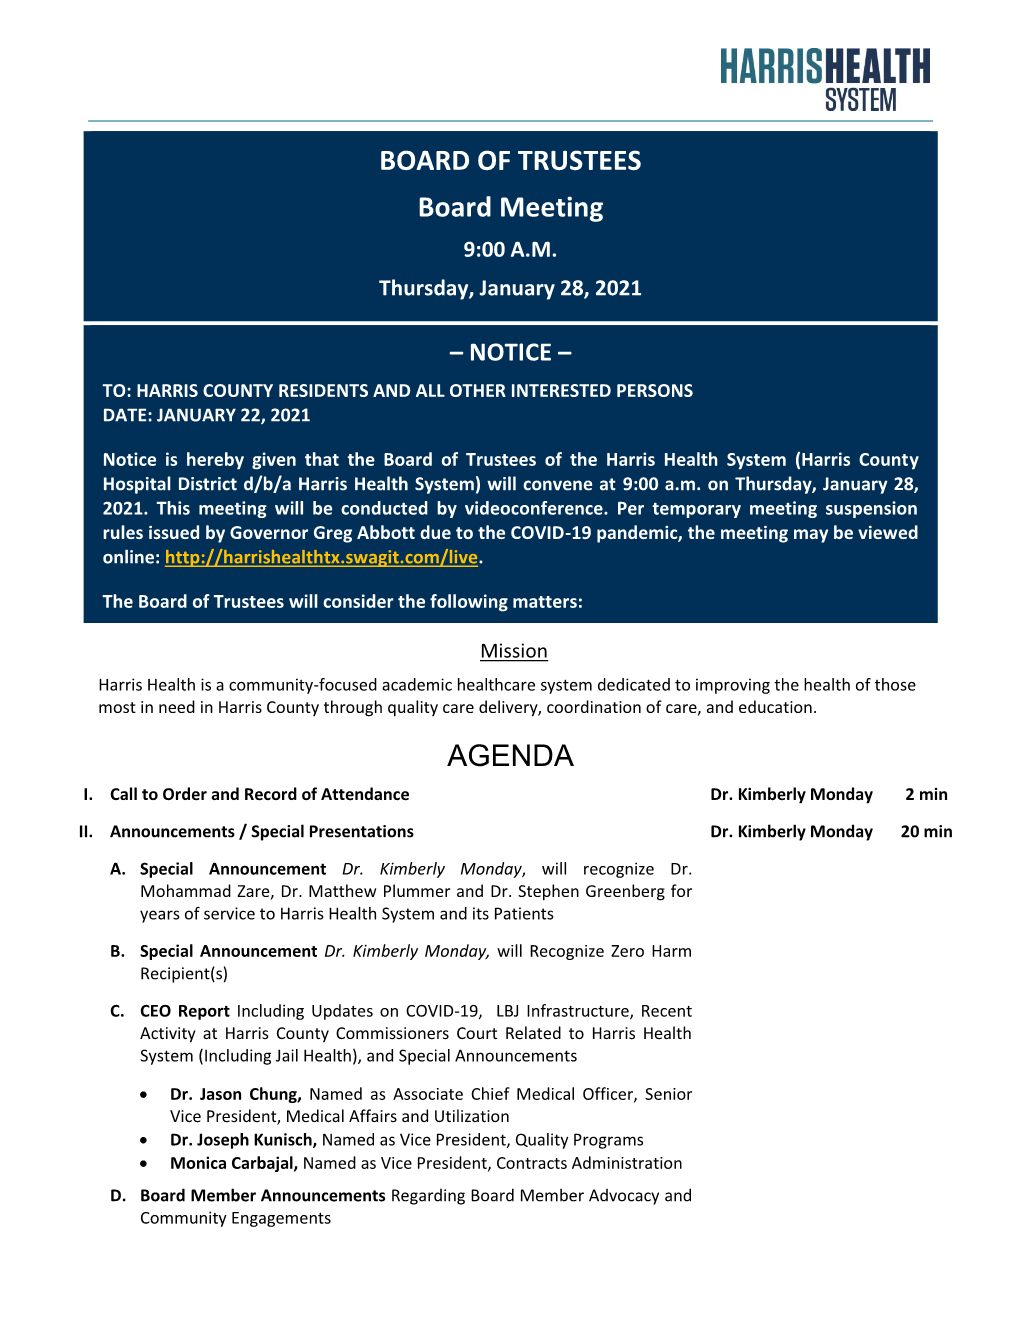 Board of Trustees Board Meeting Agenda January 28, 2021 Page 2